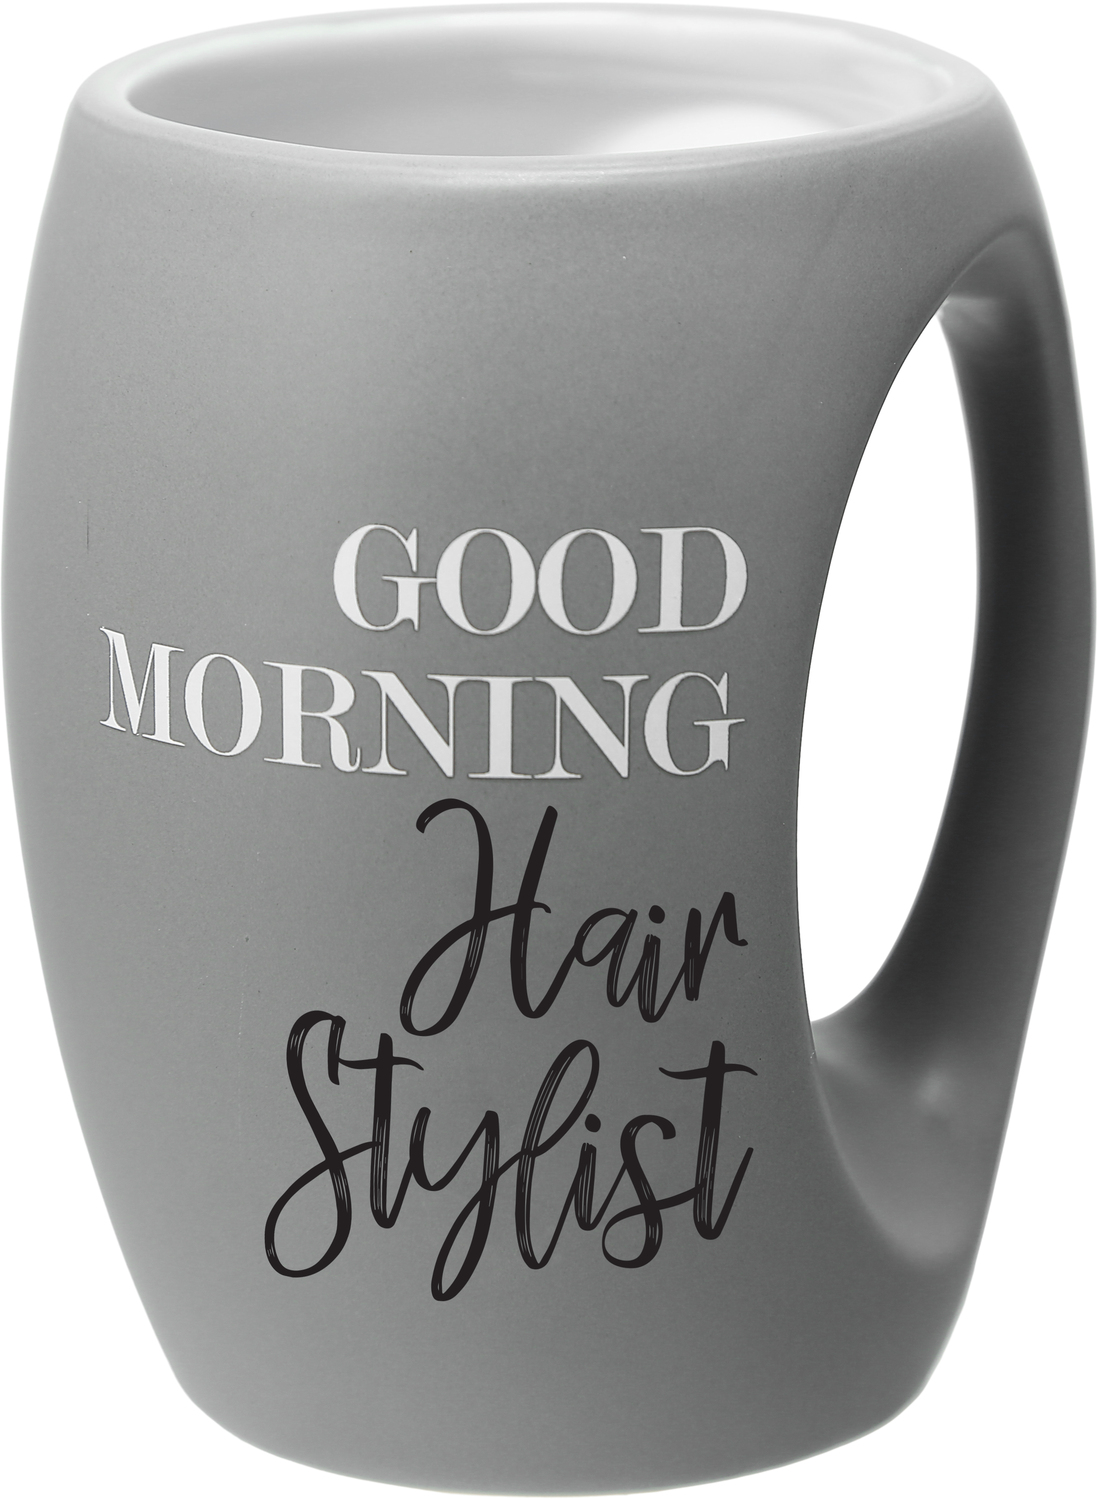 Hair Stylist by Good Morning - Hair Stylist - 16 oz Cup